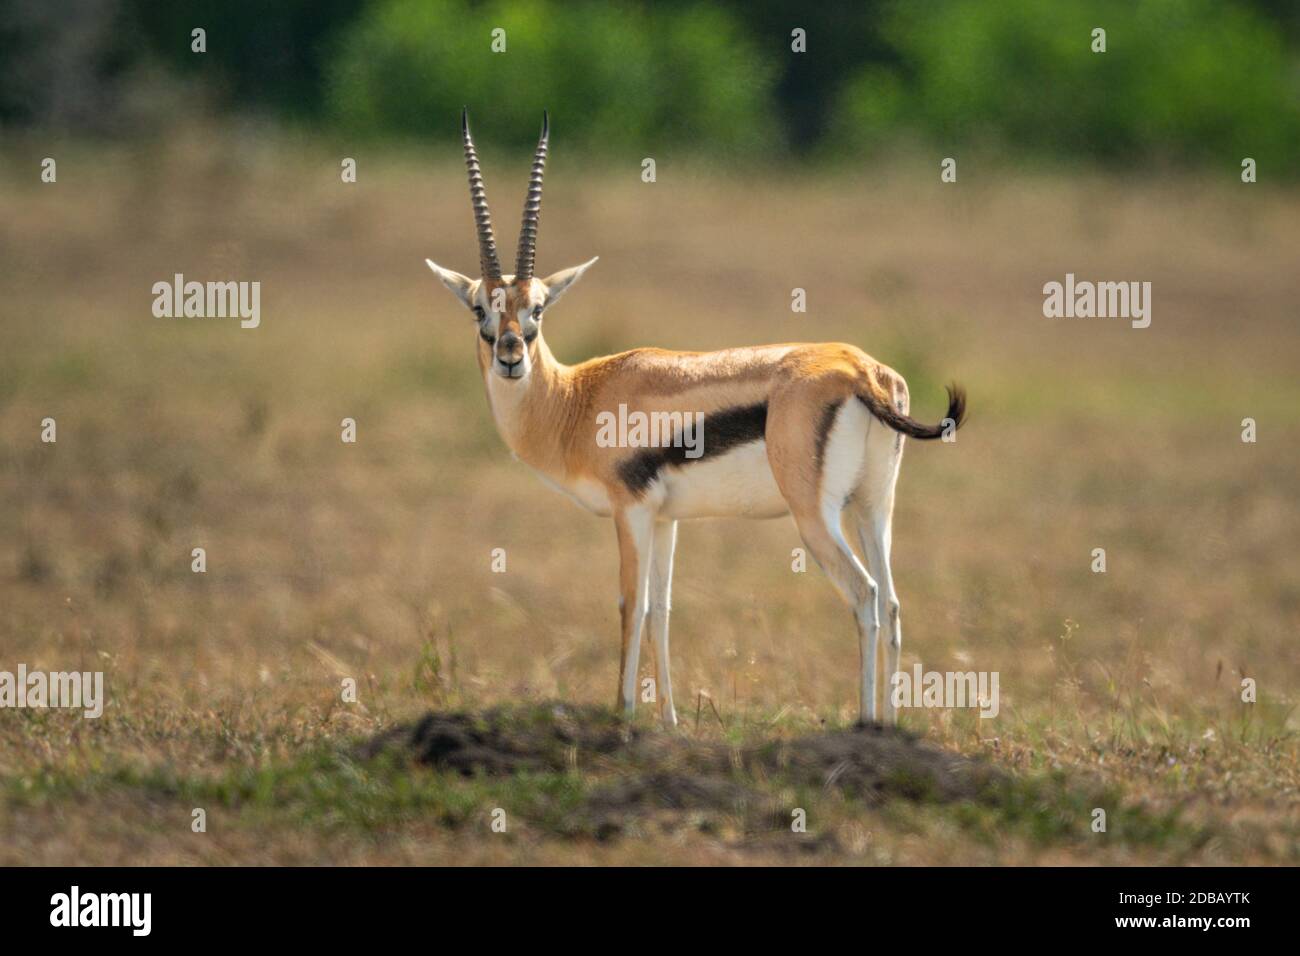 Thomson gazelle stands in grassland eyeing camera Stock Photo